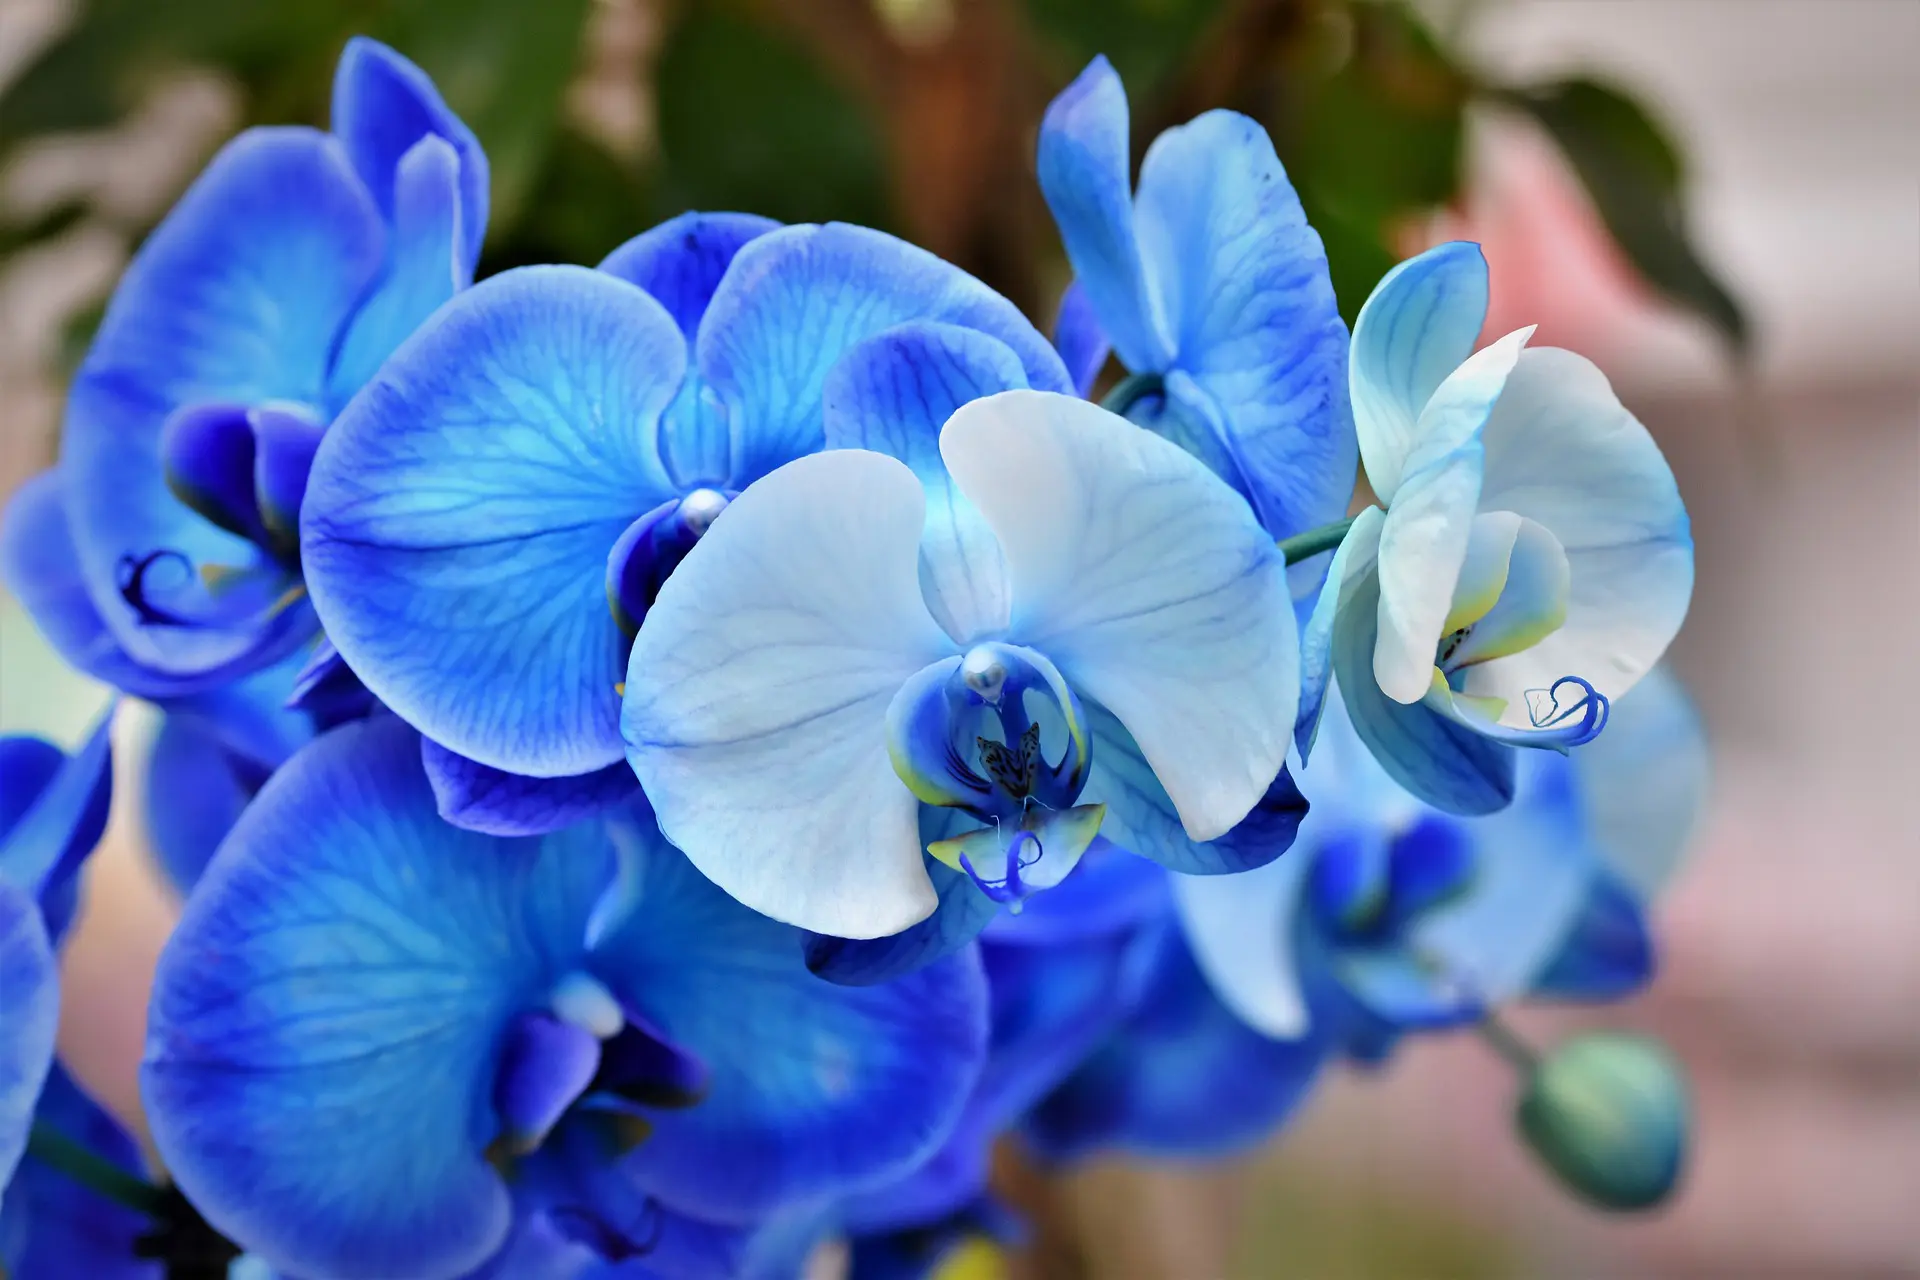 Como cuidar de orquídeas: dicas práticas e seguras - eCycle